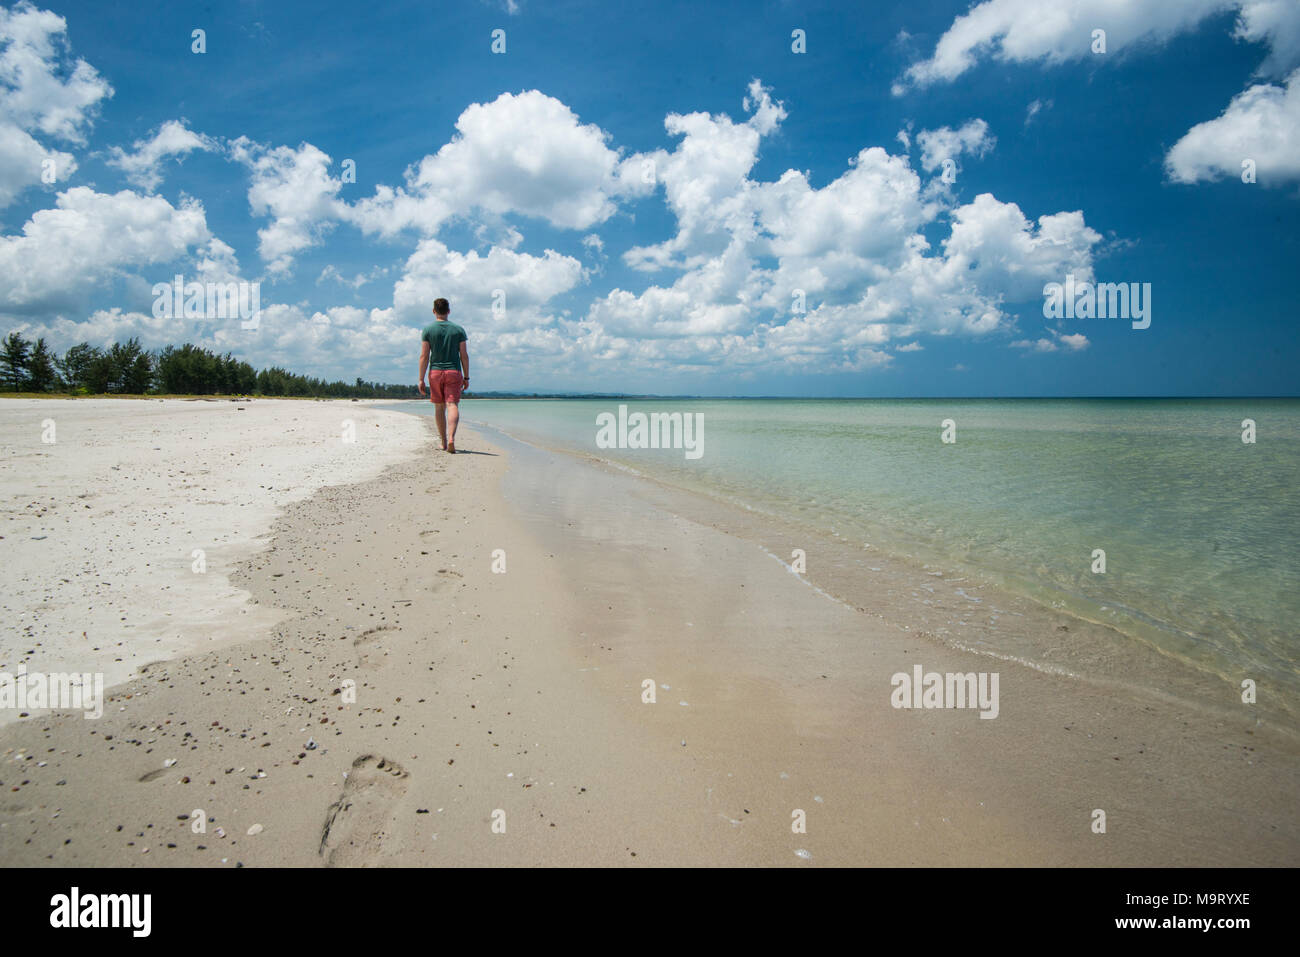 A man walking along a shore, Kudat, Sabah, Malaysia, Borneo, Stock Photo